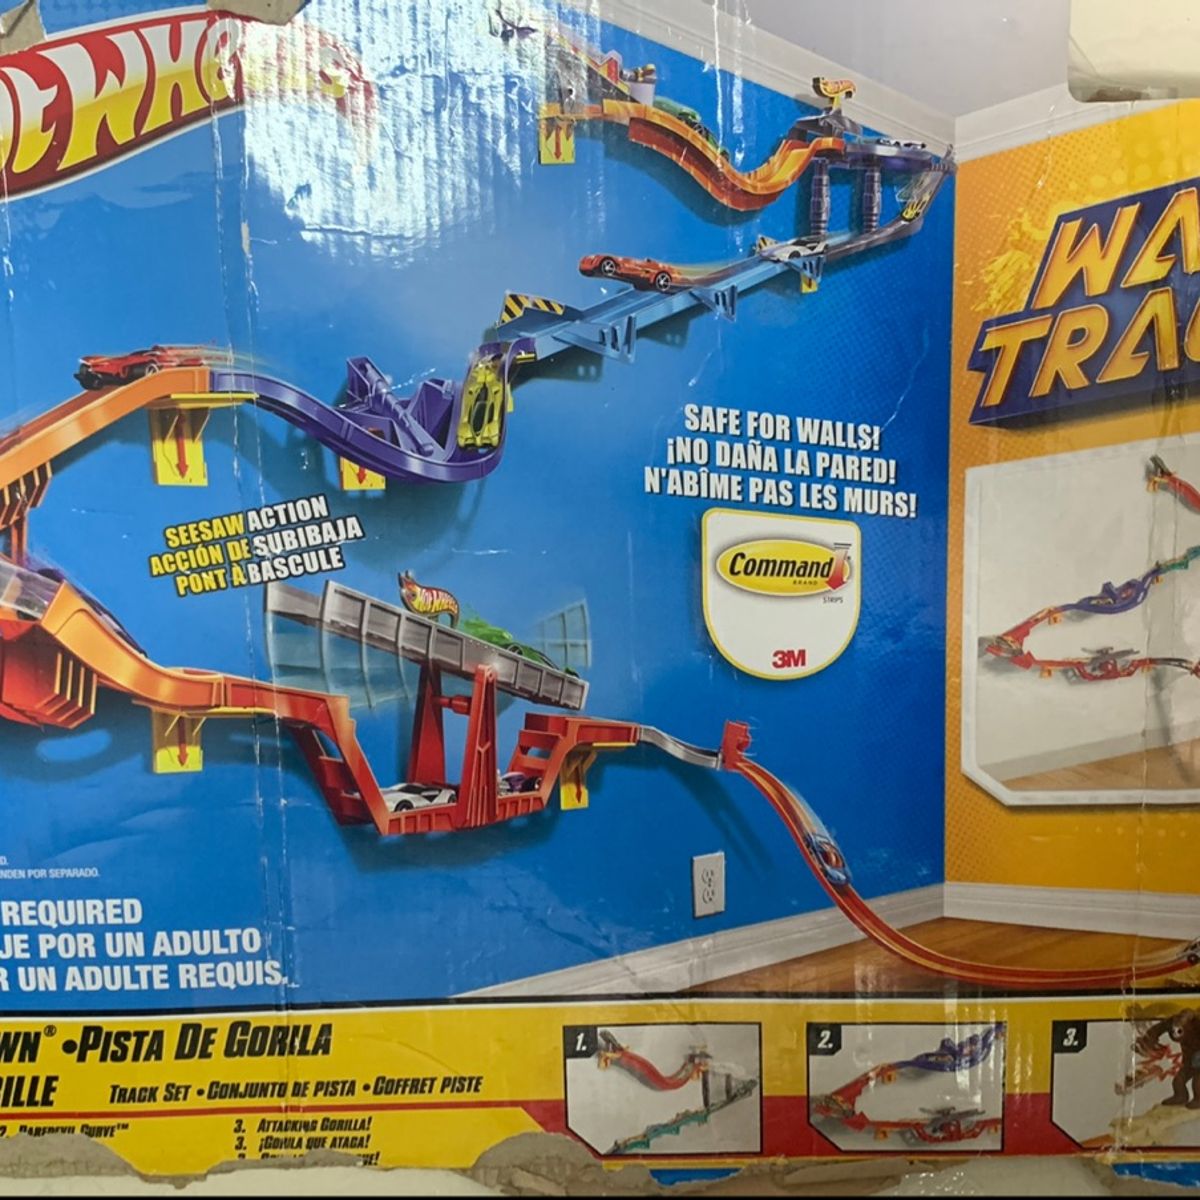 Pista Hot Wheels Wall Tracks, Brinquedo Mattel Usado 86634864